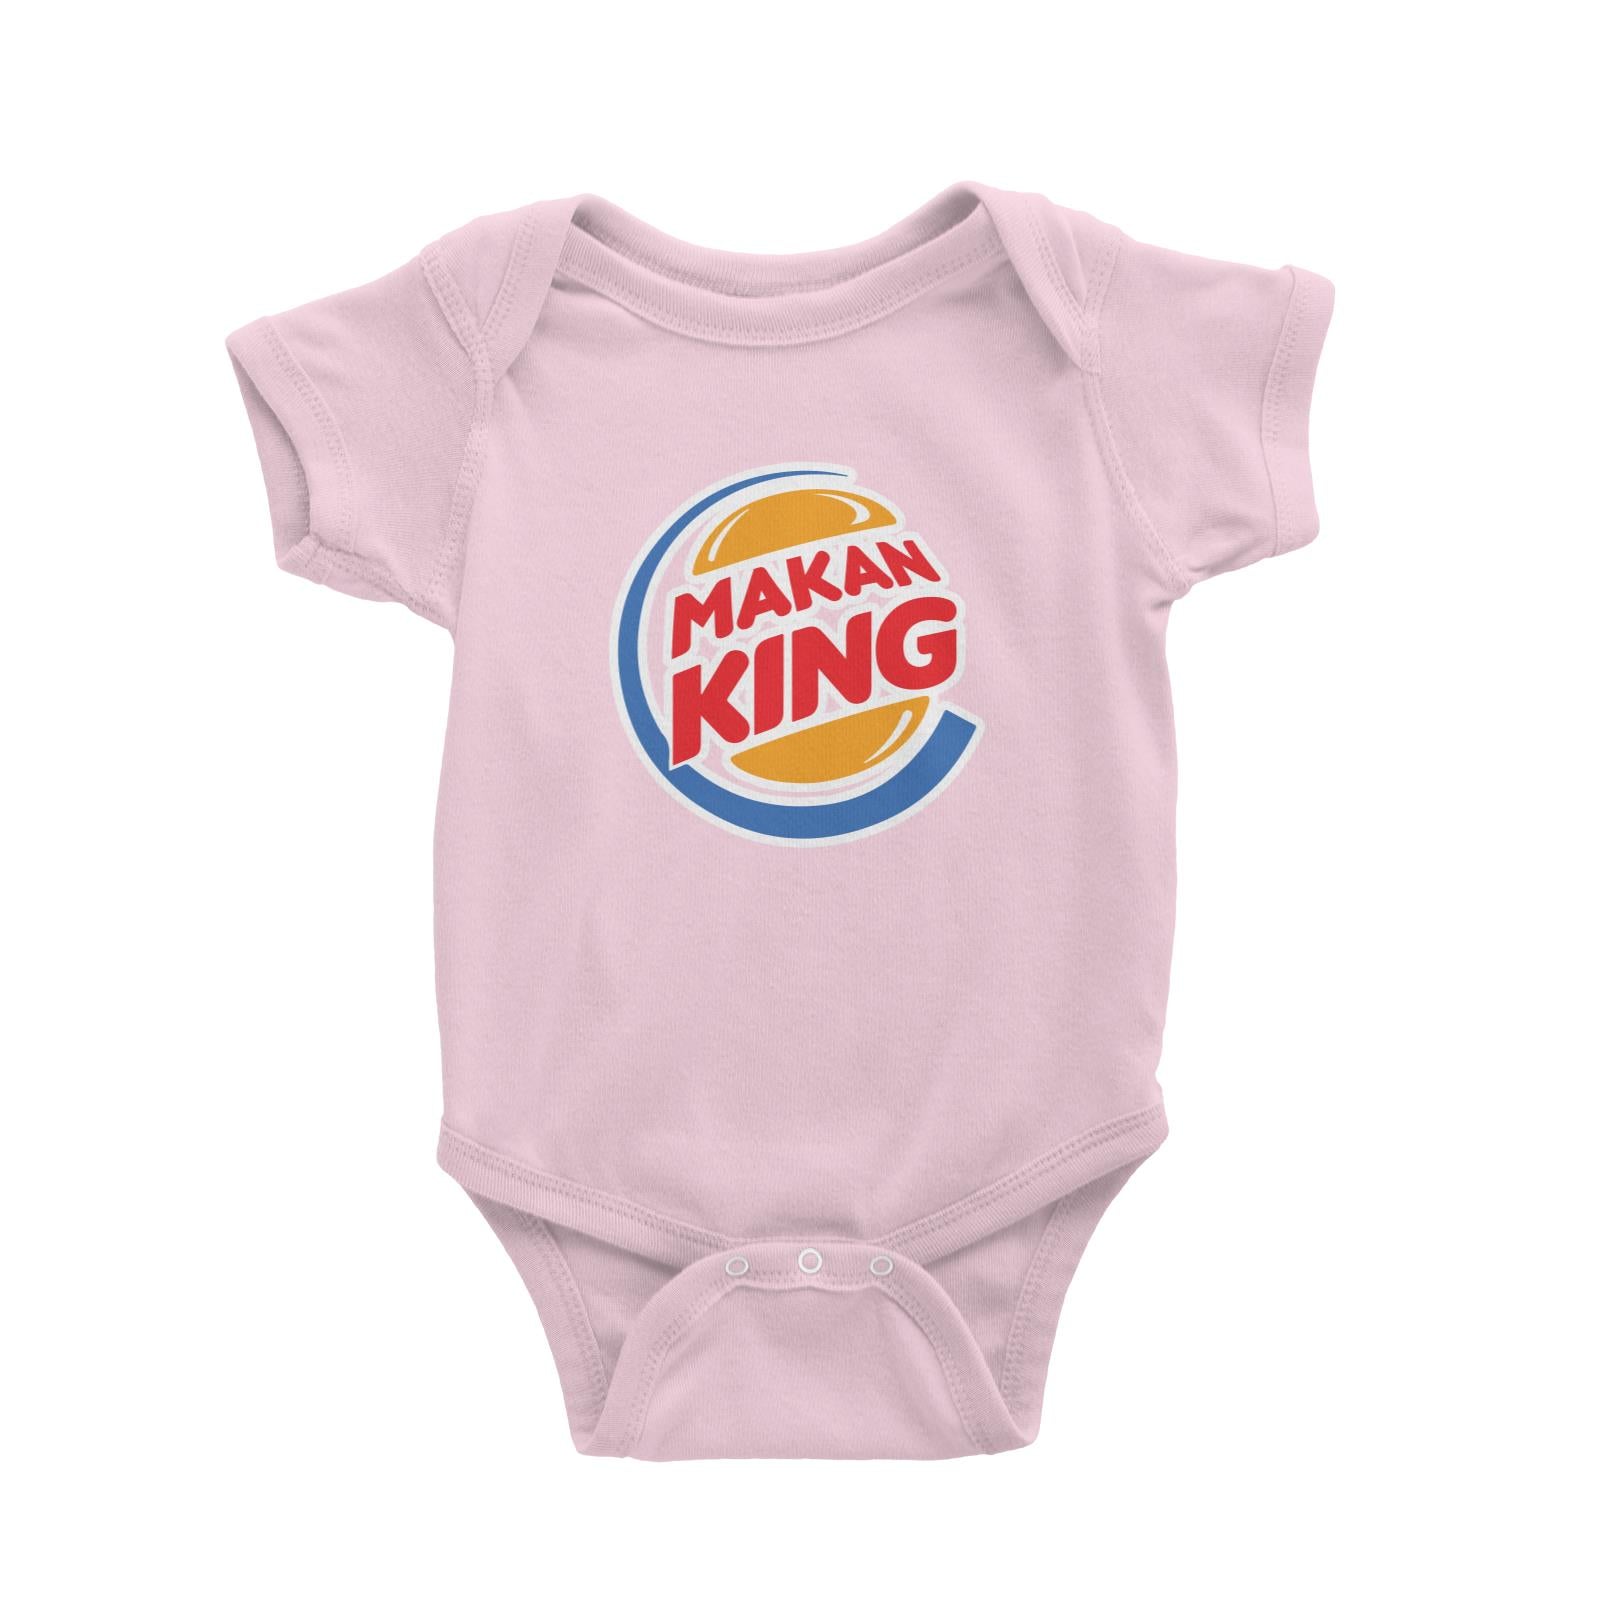 Slang Statement Makan King Baby Romper